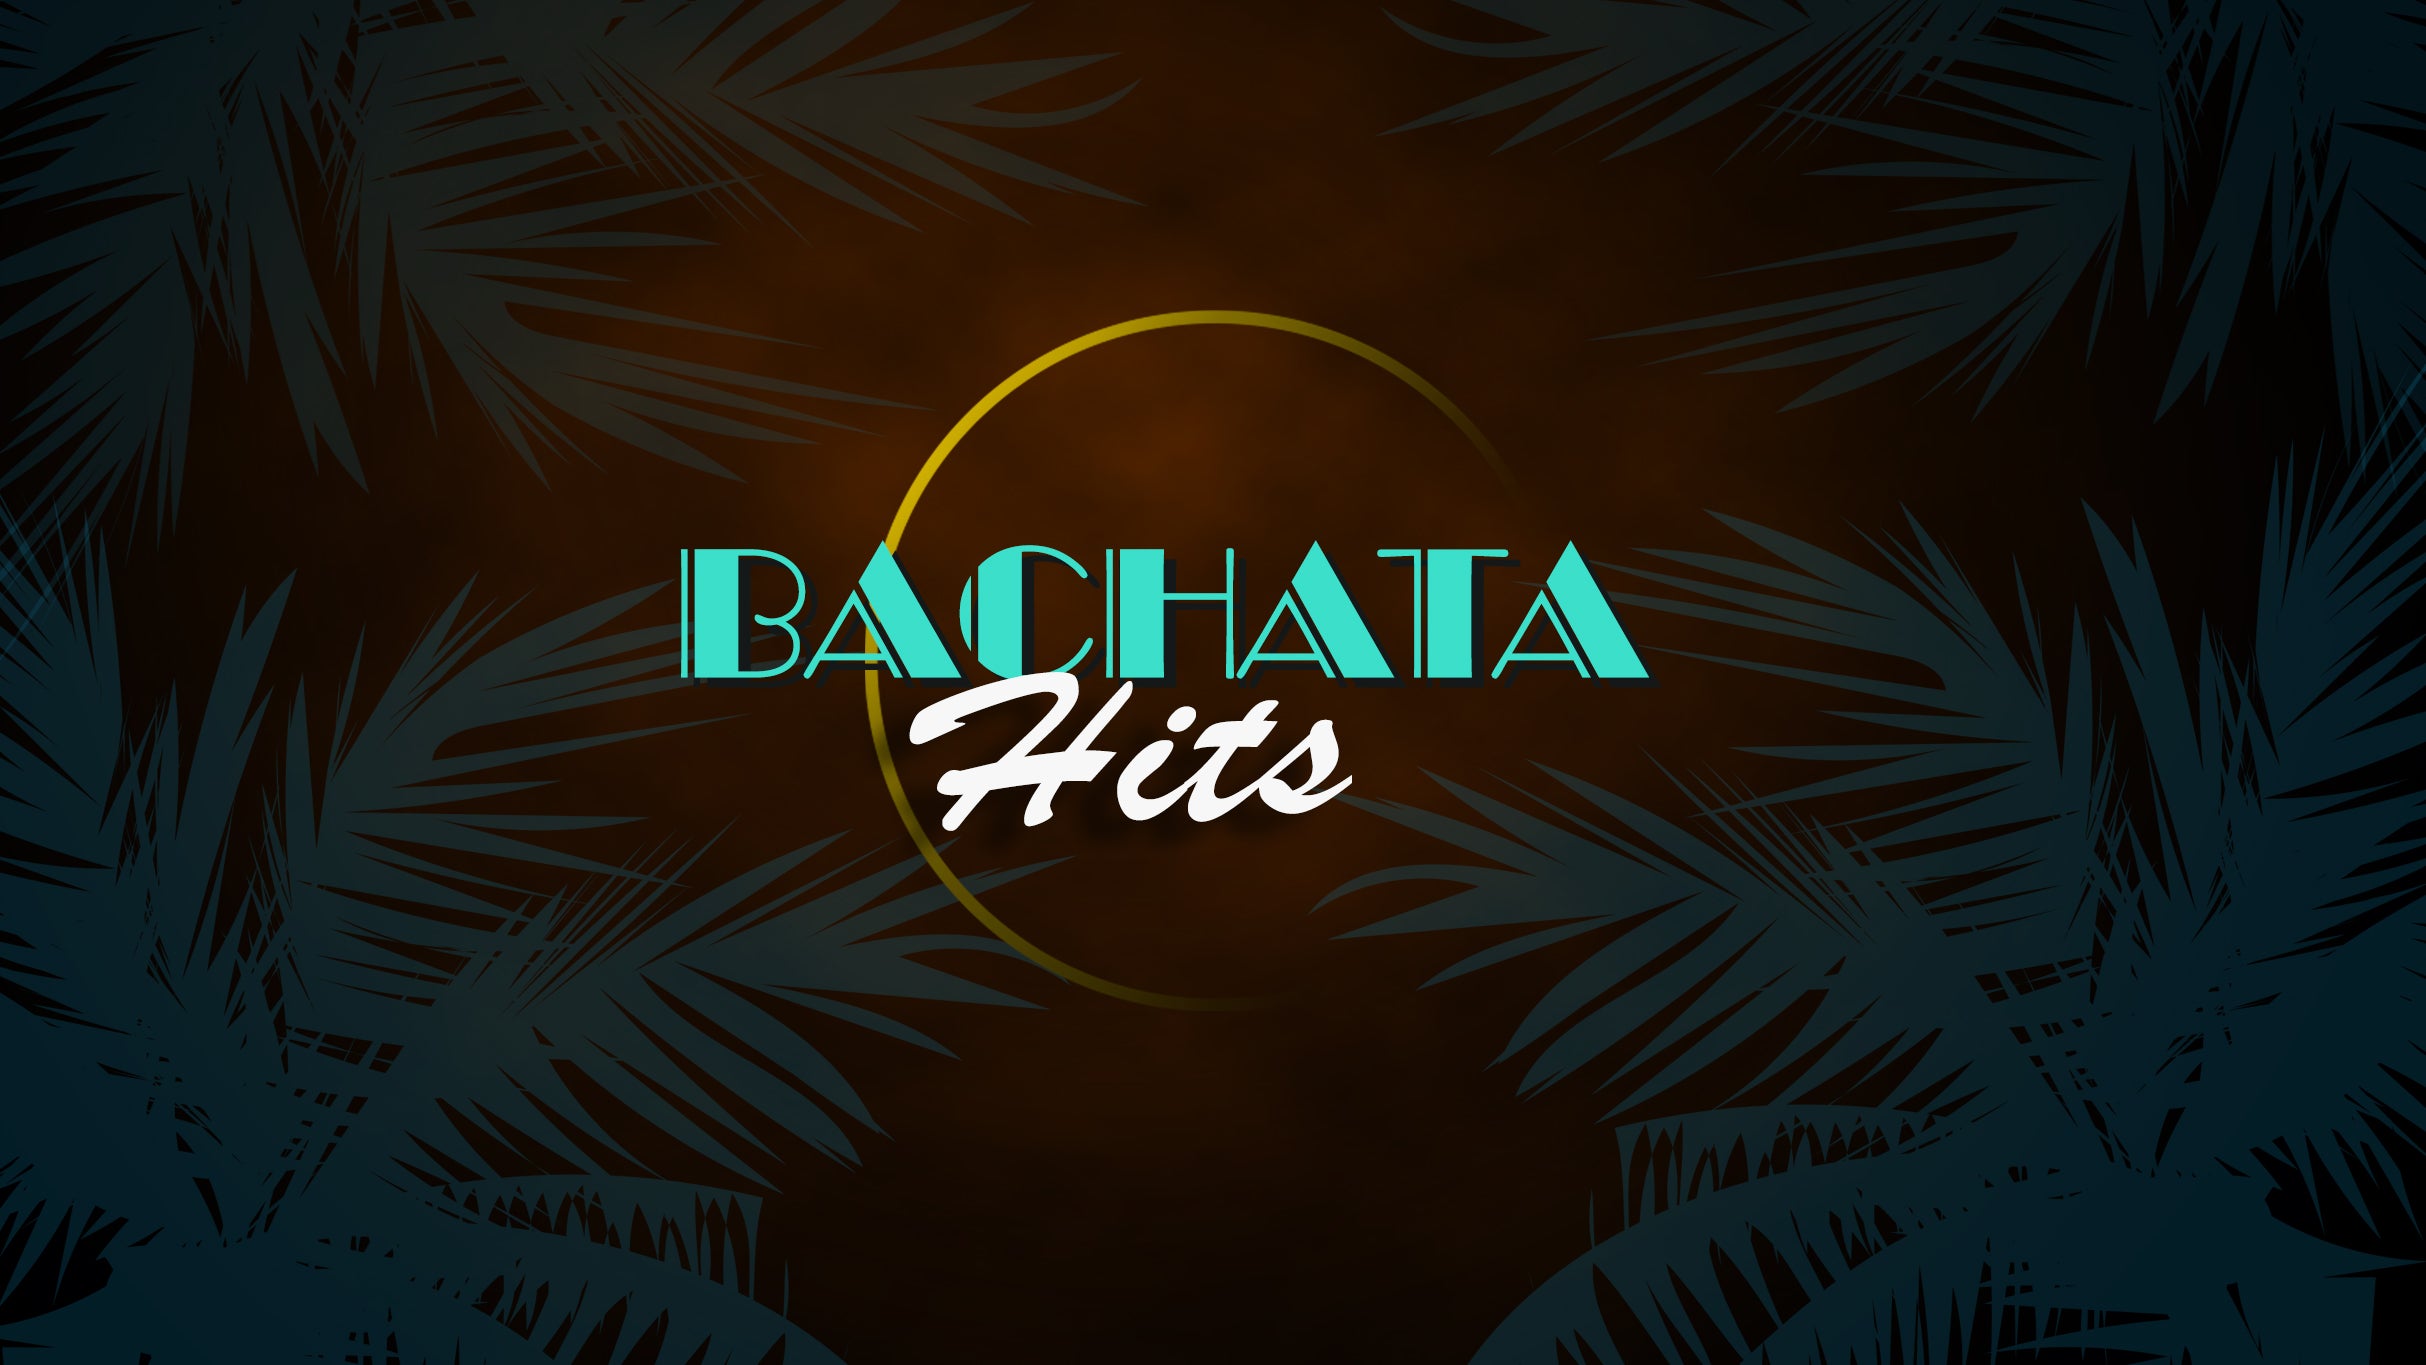 Bachata Hits presale code for show tickets in Miami, FL (Kaseya Center)